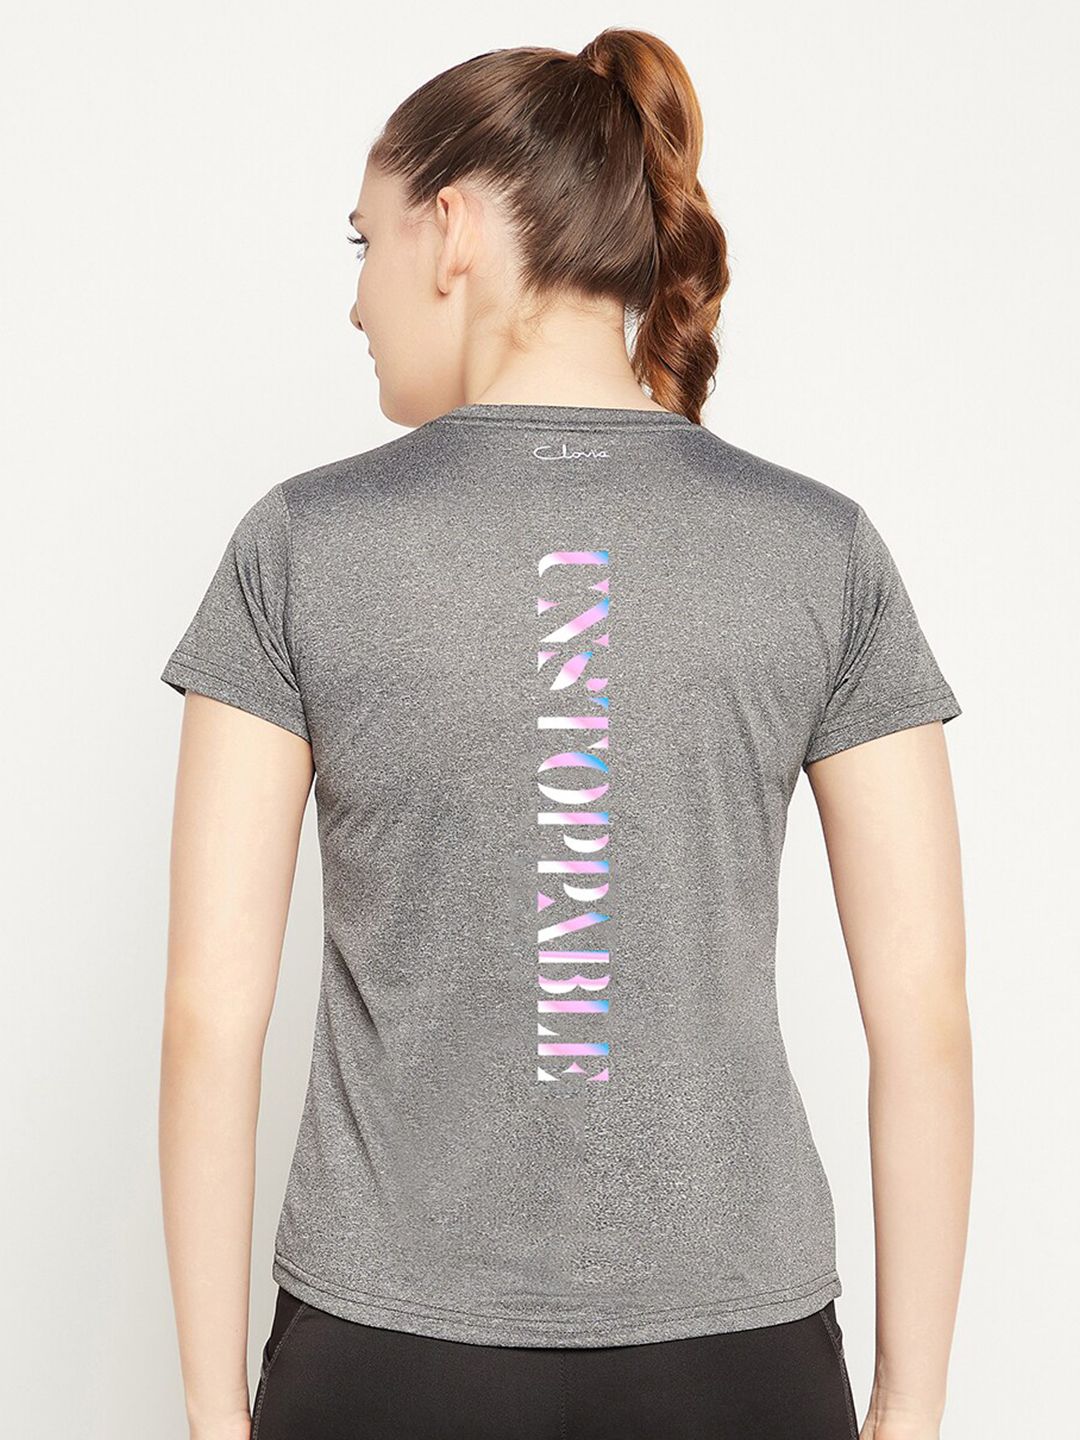 Clovia Women Grey Typography Printed Slim Fit Sports T-shirt Price in India